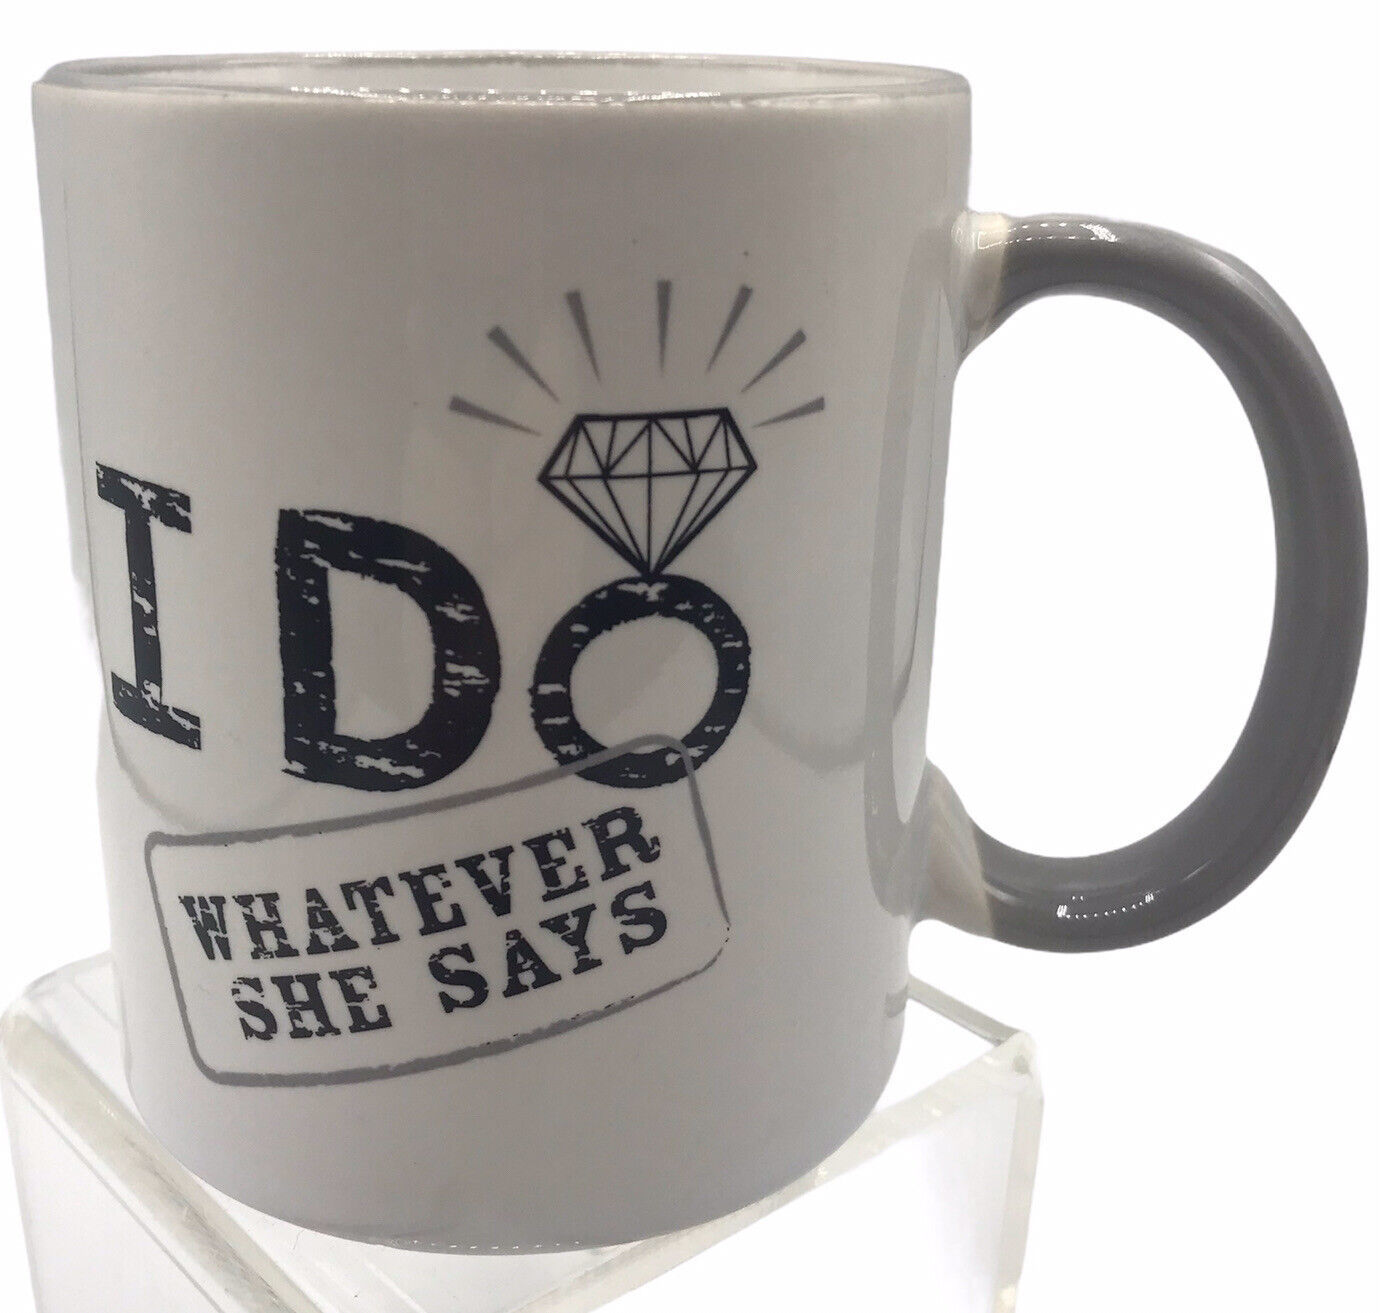 "I Do Whatever She Says" Coffee Mug by Ganz Diamond Ring Design 12 oz. Wedding - $12.57